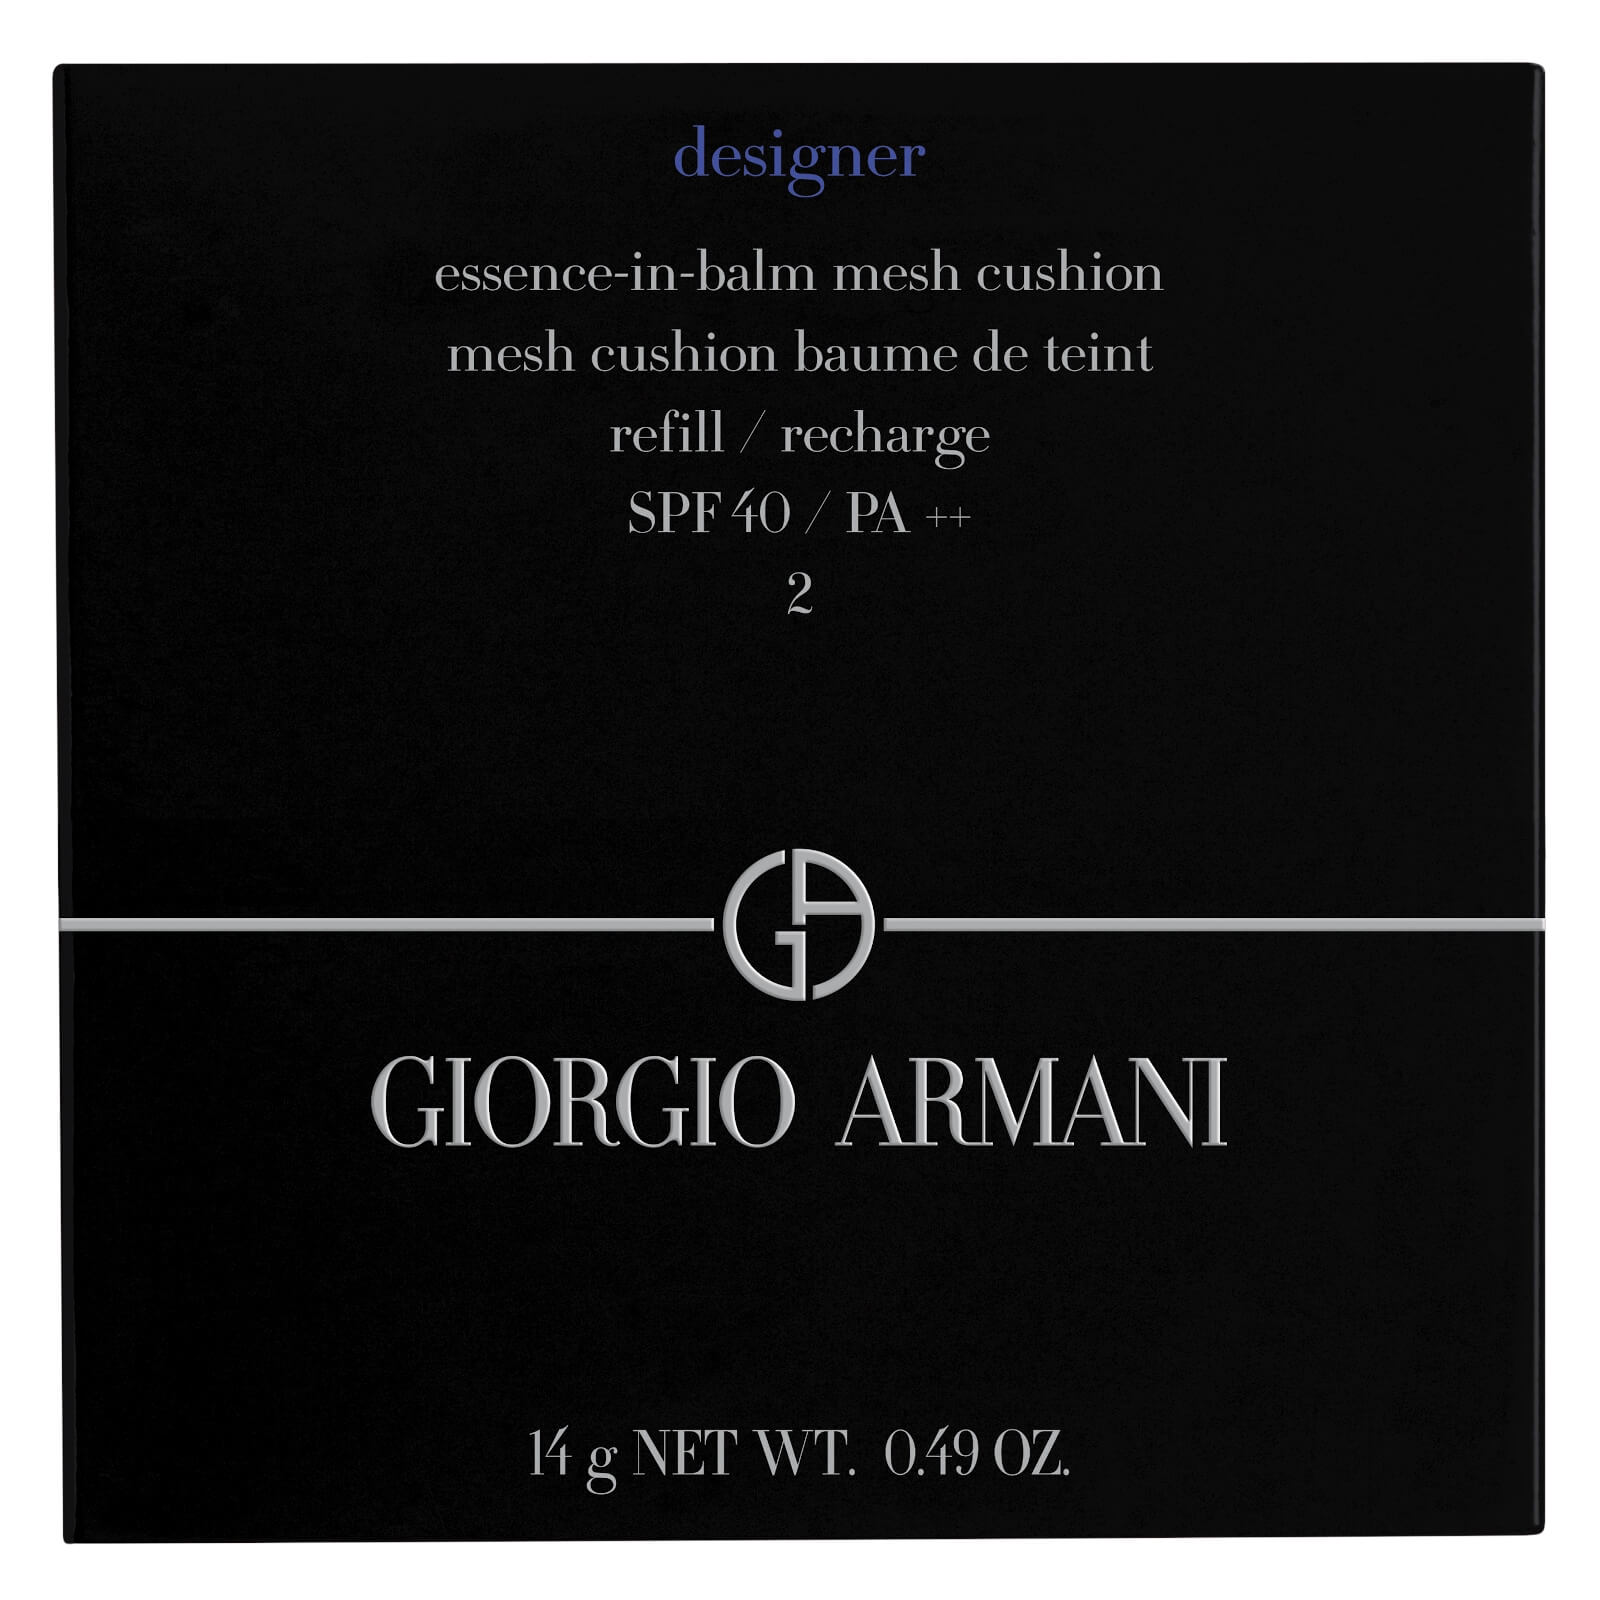 giorgio armani cushion foundation refill